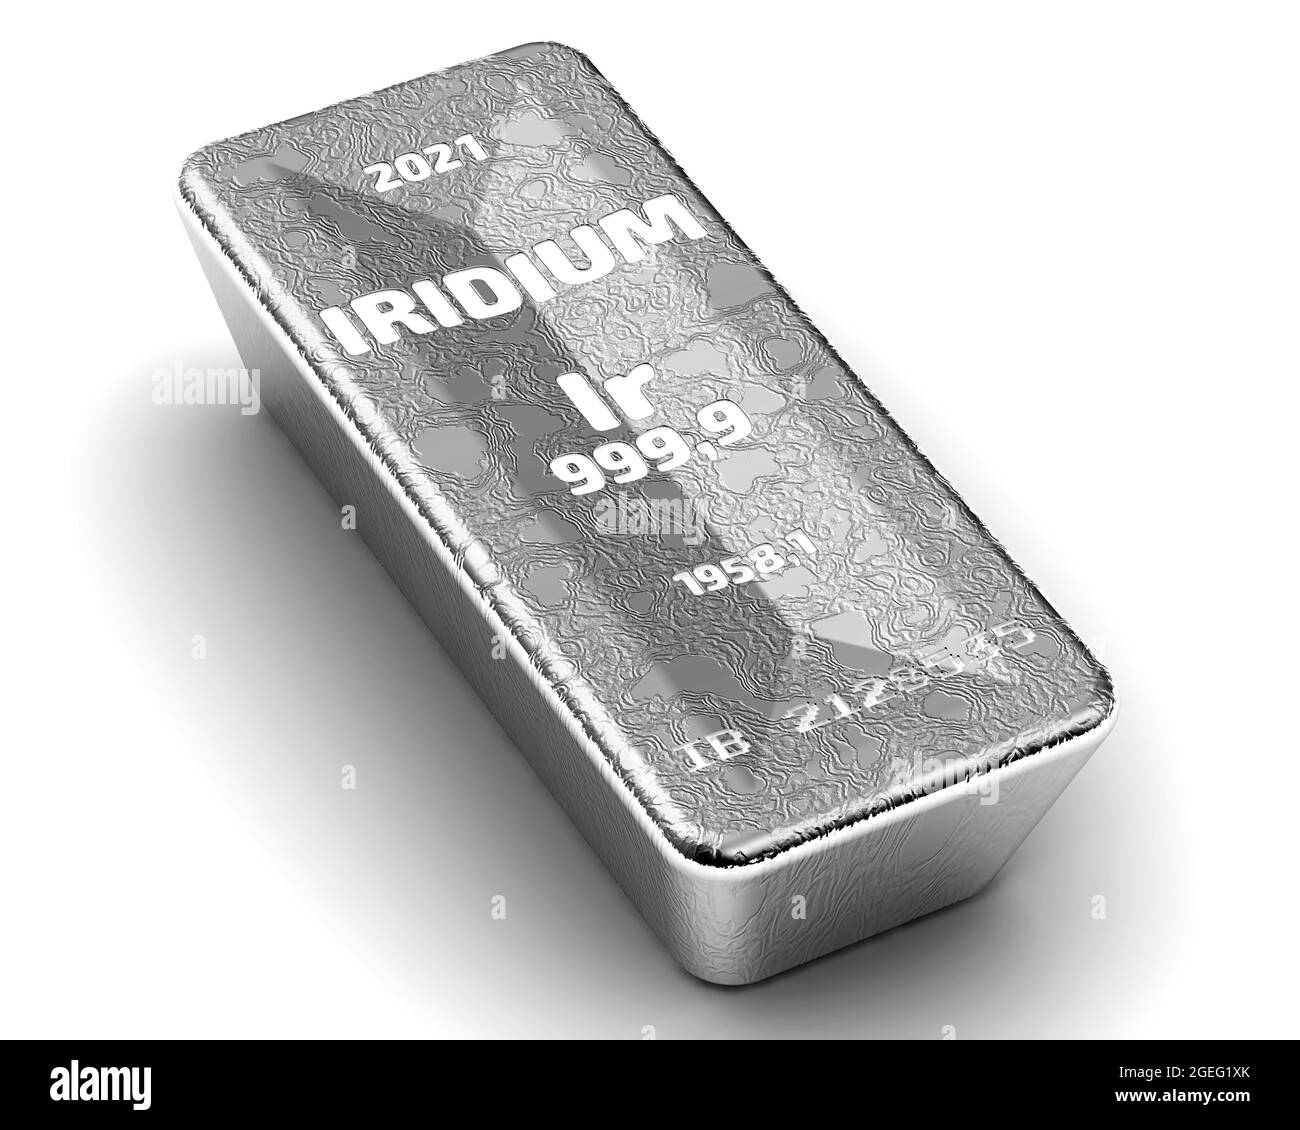 The highest standard iridium bar. One ingot of 999.9 Fine Iridium bar on white background. 3D illustration Stock Photo